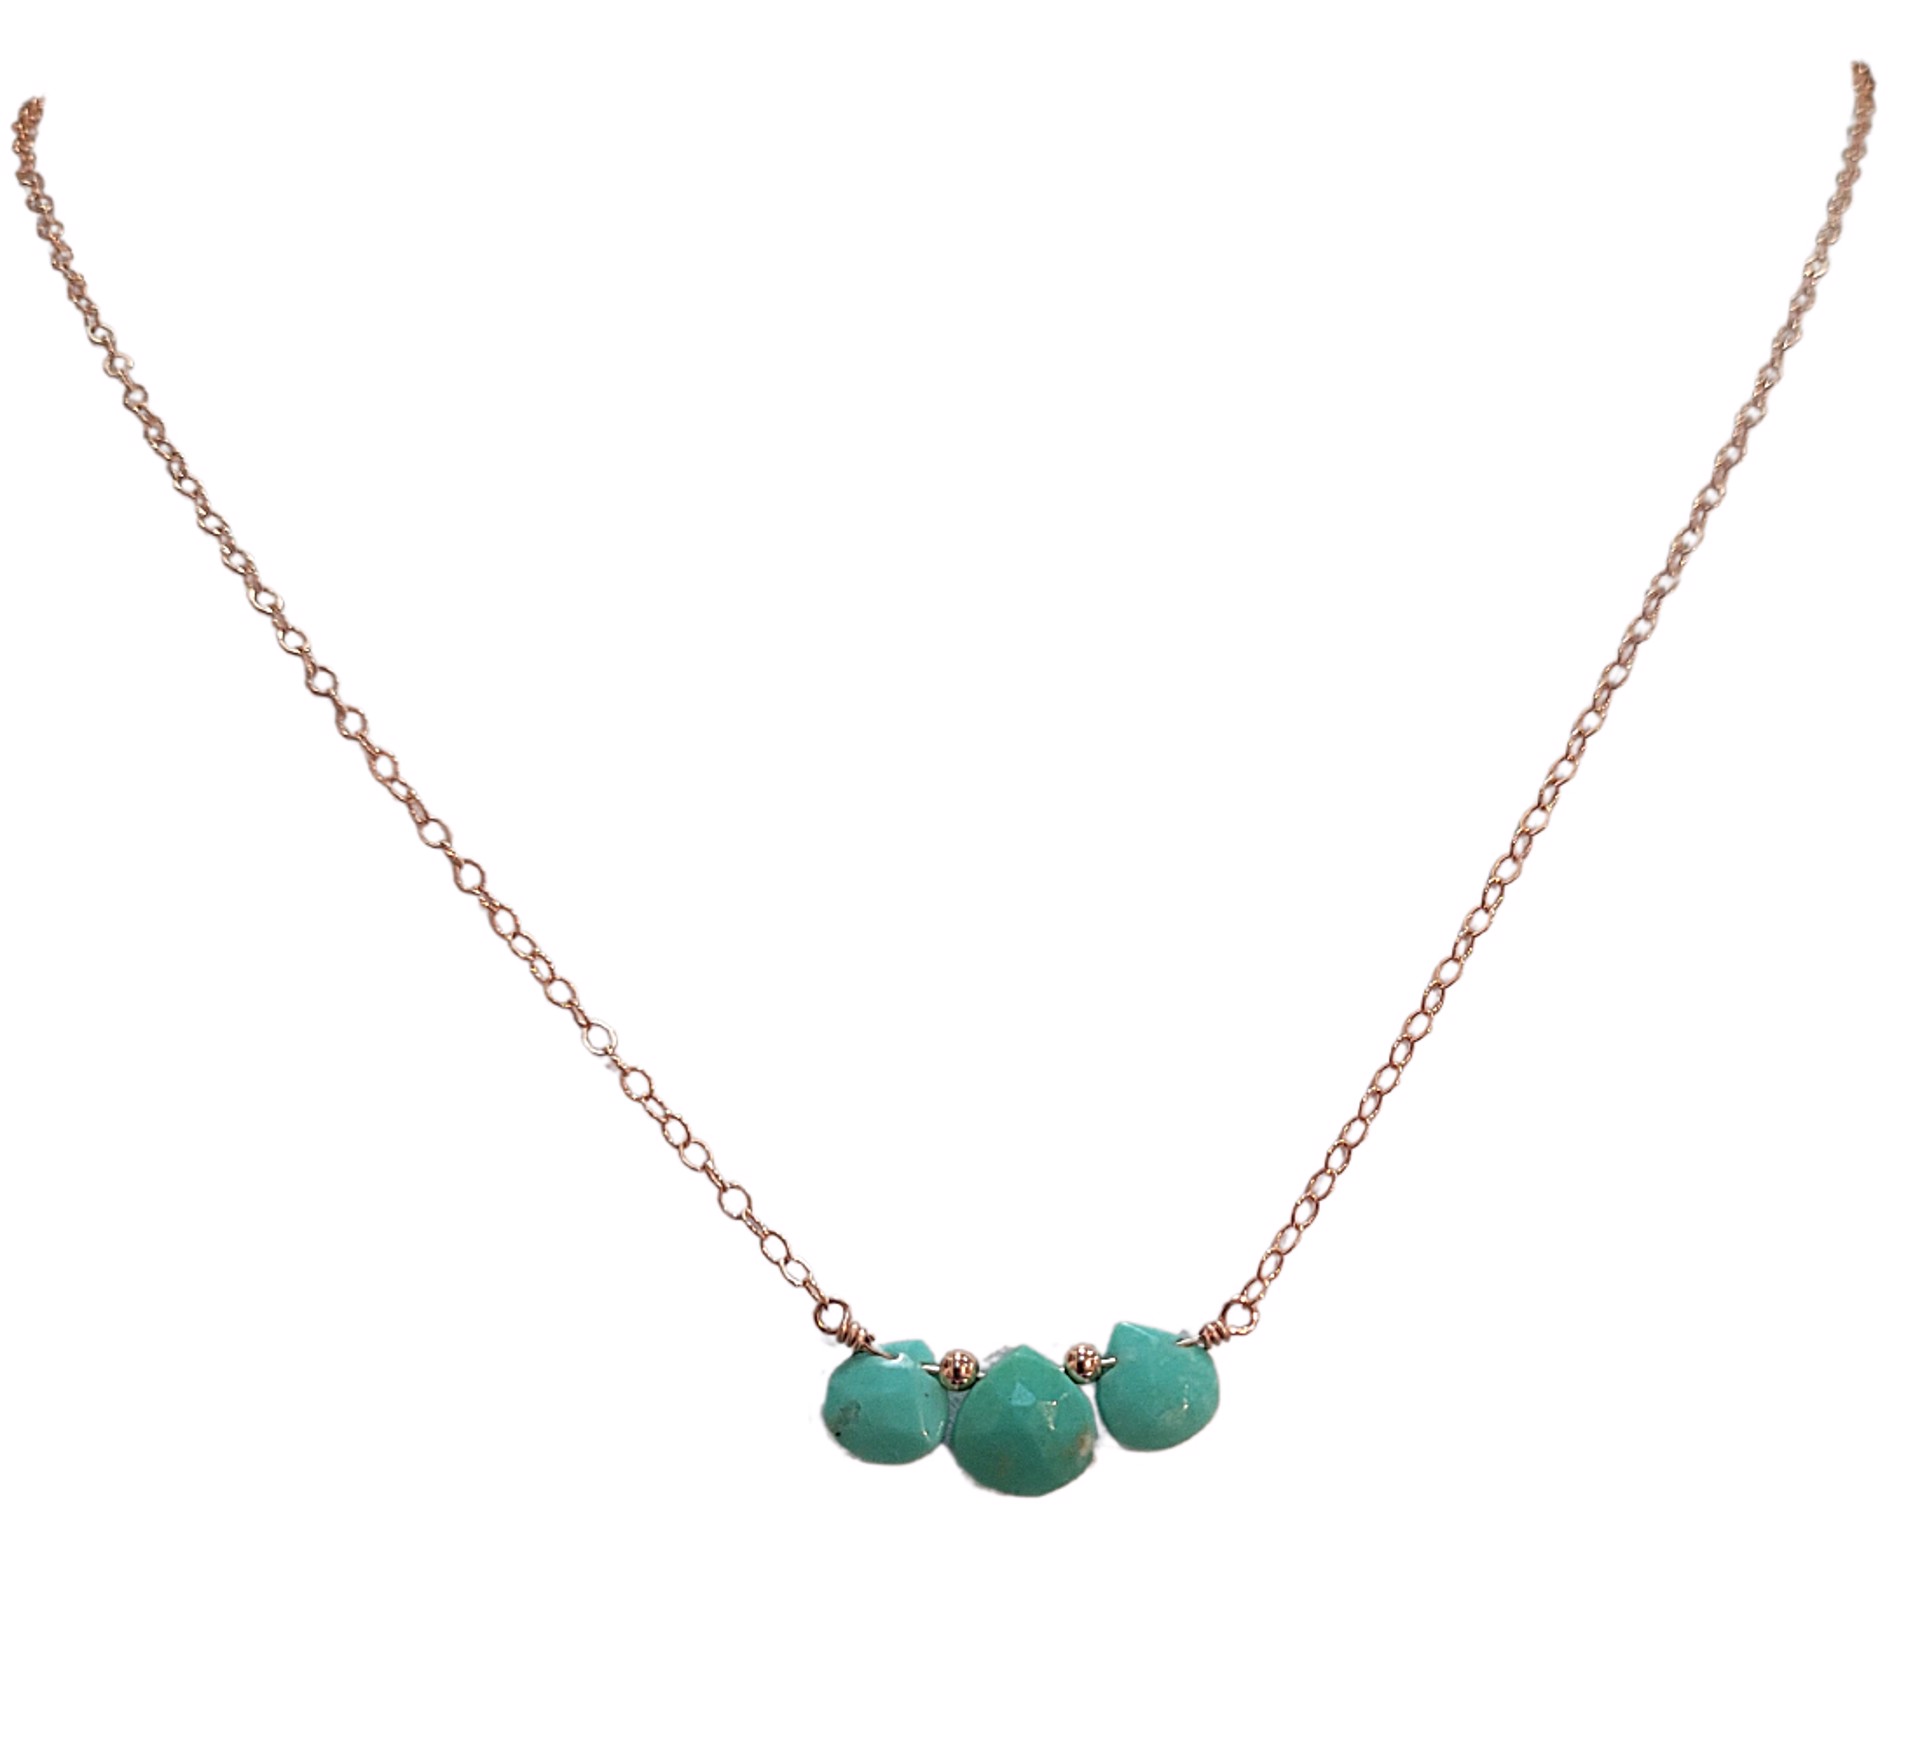 Necklace-Arizona Turquoise 3 Stone 14K Gold Filled by Julia Balestracci